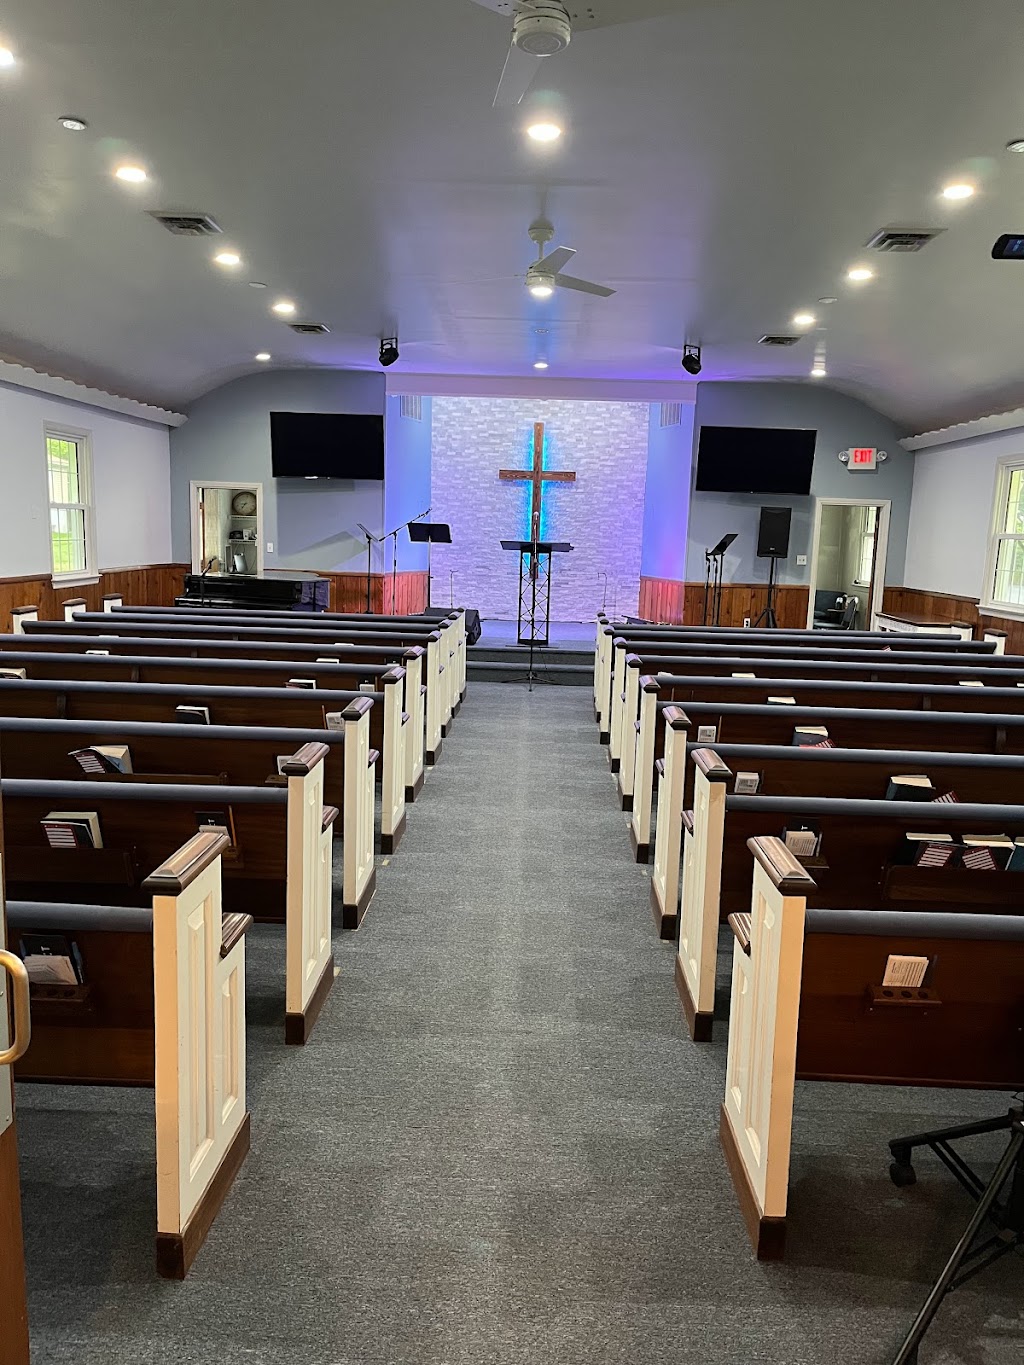 The Rock Church of South Jersey | 445 Masonville Centerton Rd, Mt Laurel Township, NJ 08054 | Phone: (856) 291-3989